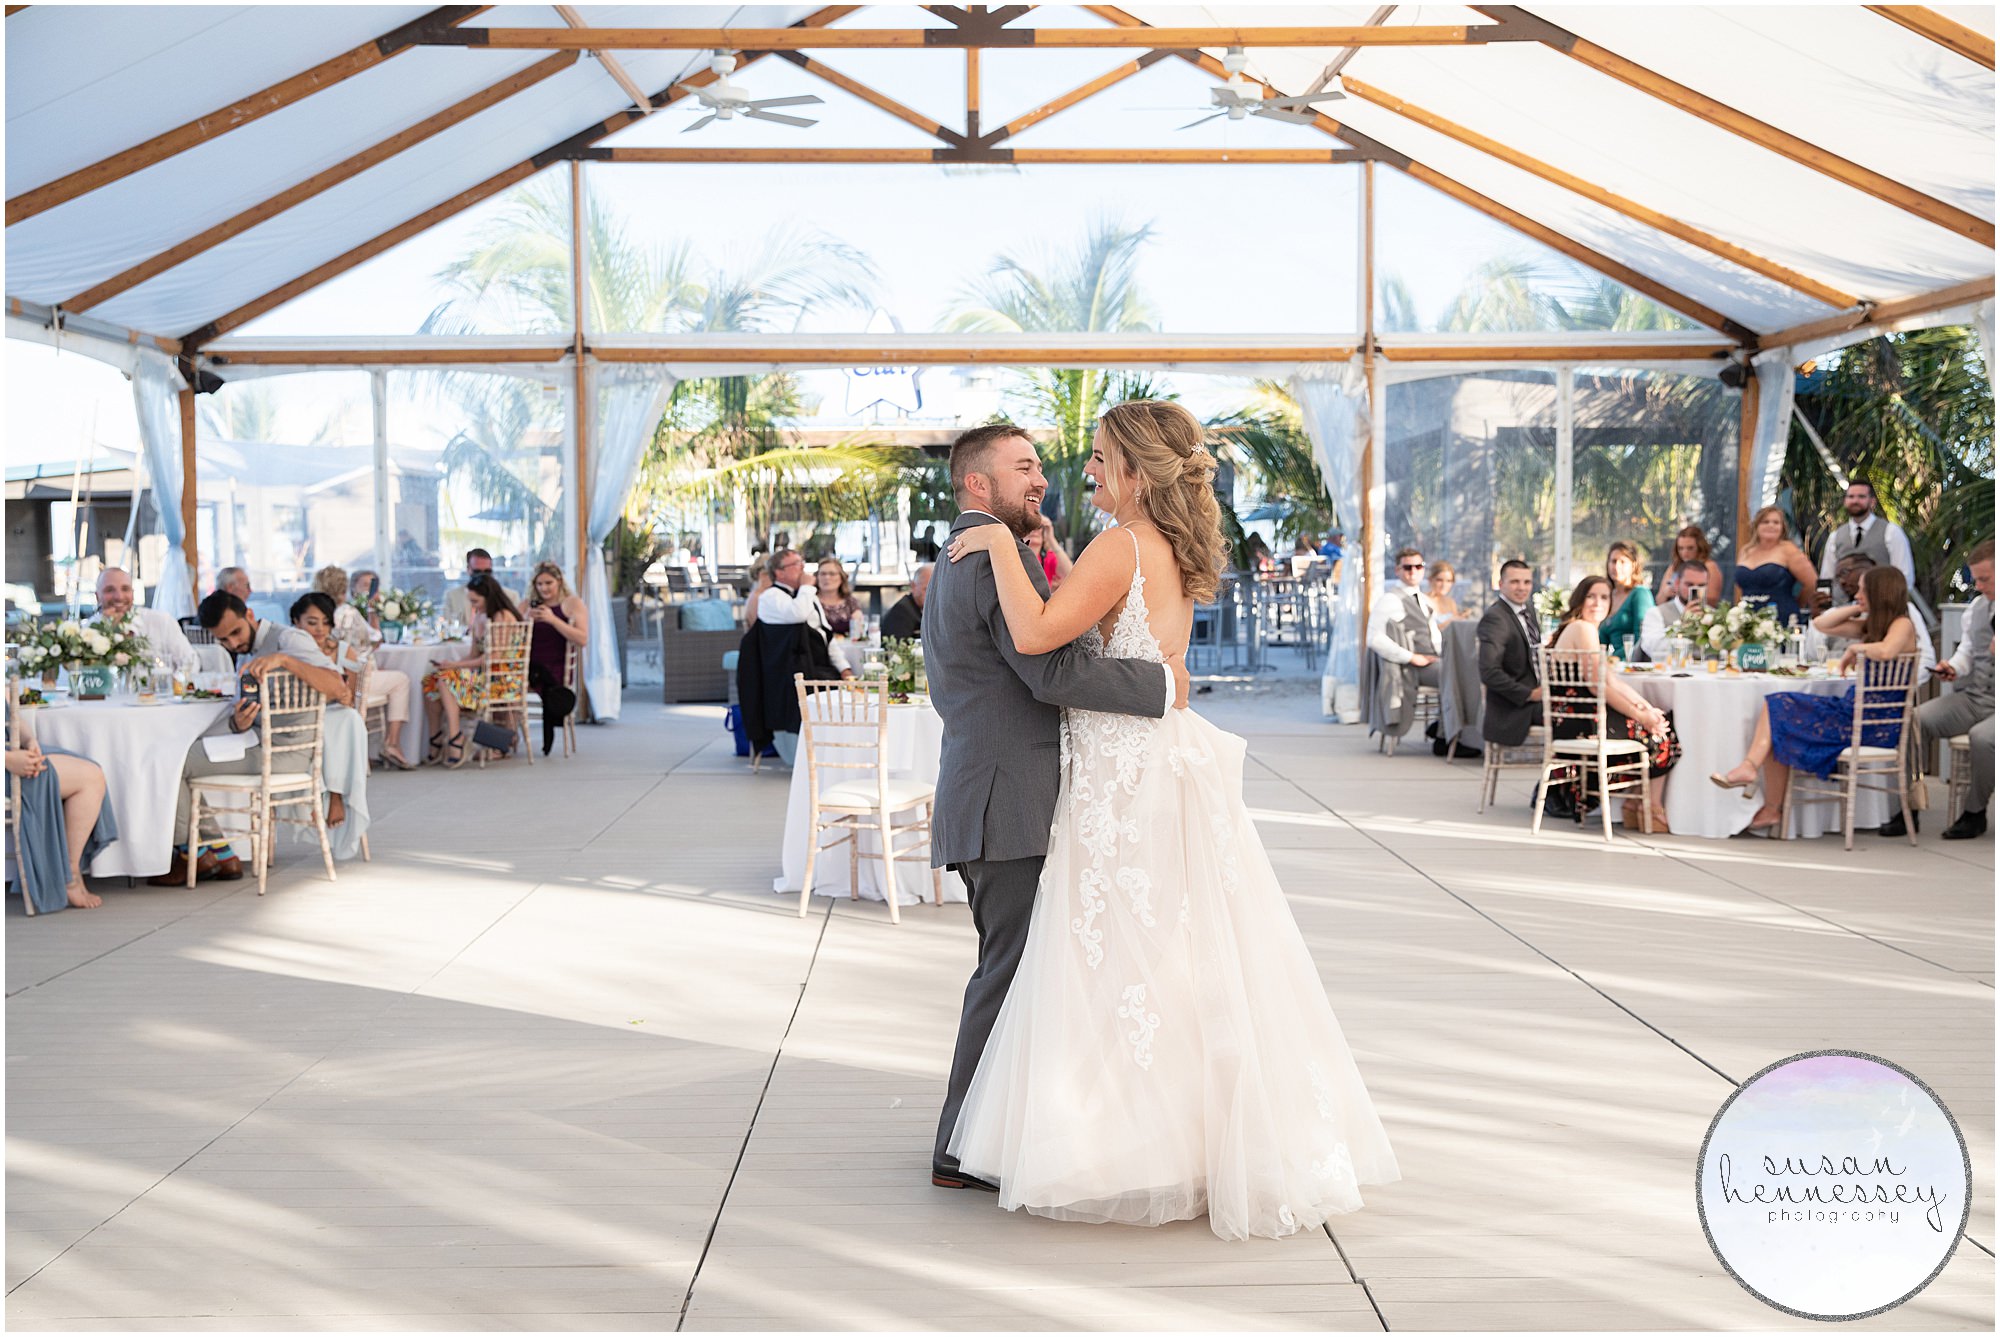 Susan Hennessey Photography Best of 2020 Weddings - Reception at ICONA Diamond Beach wedding